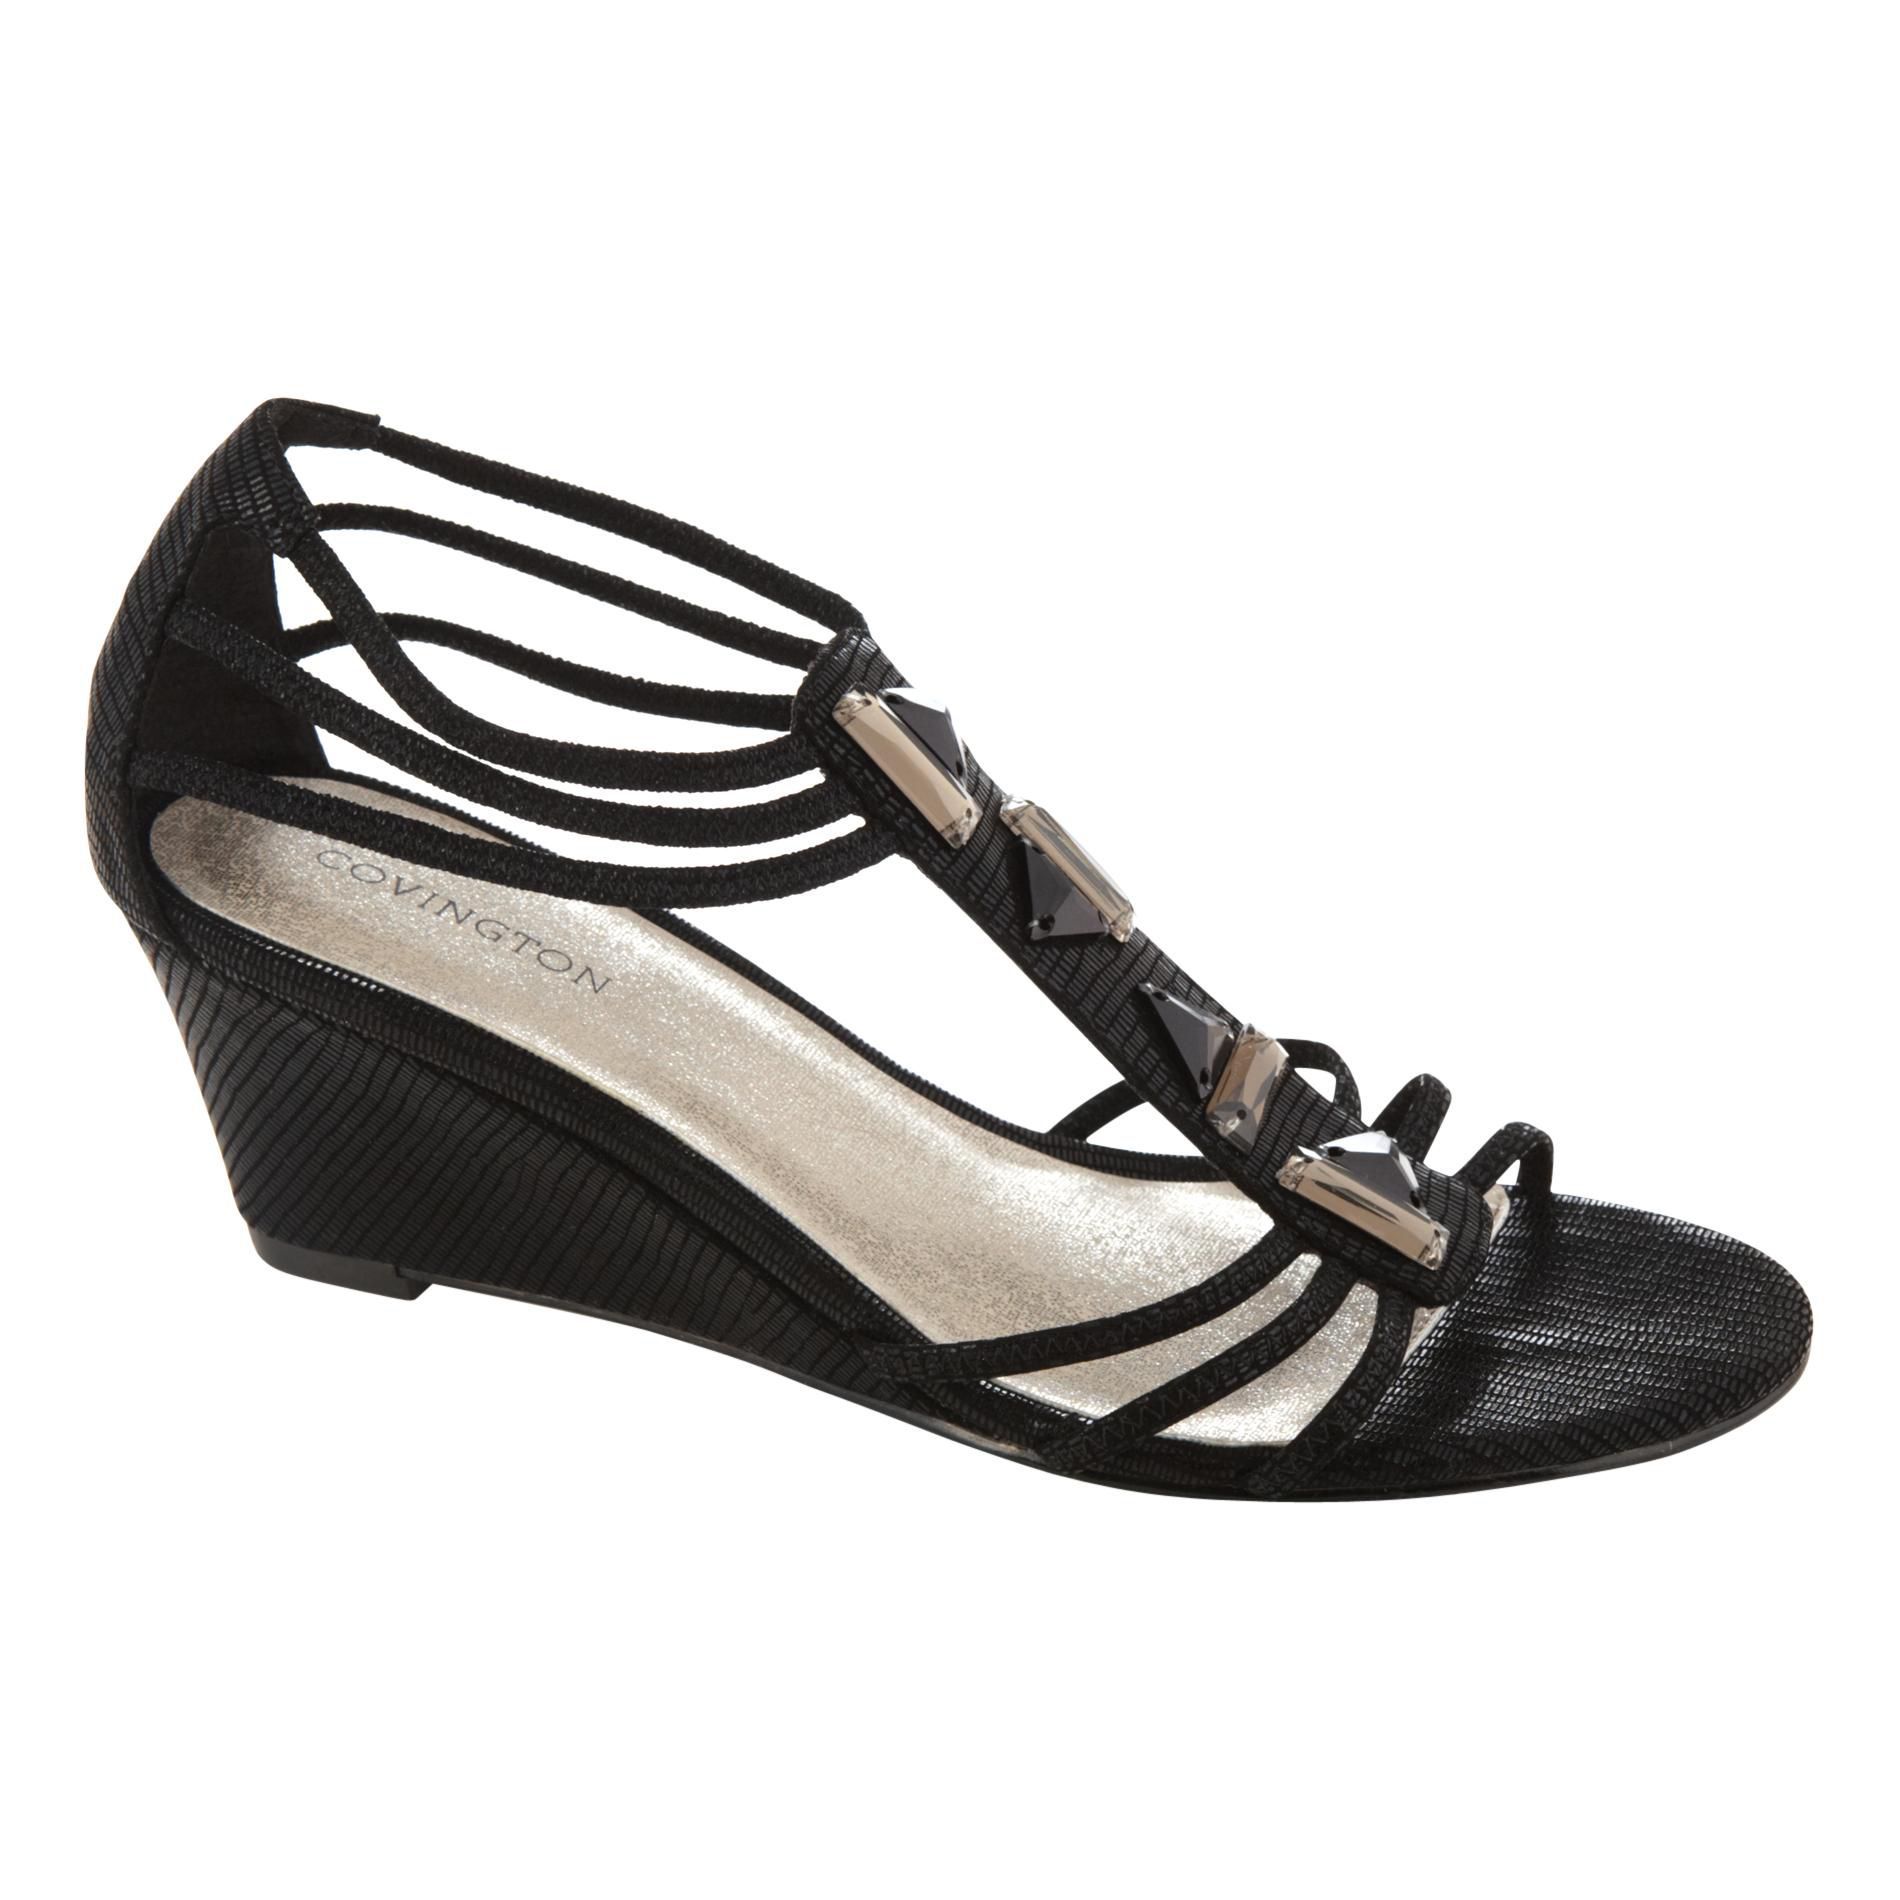 Covington Women's Wedge Sandal - Daisy - Black